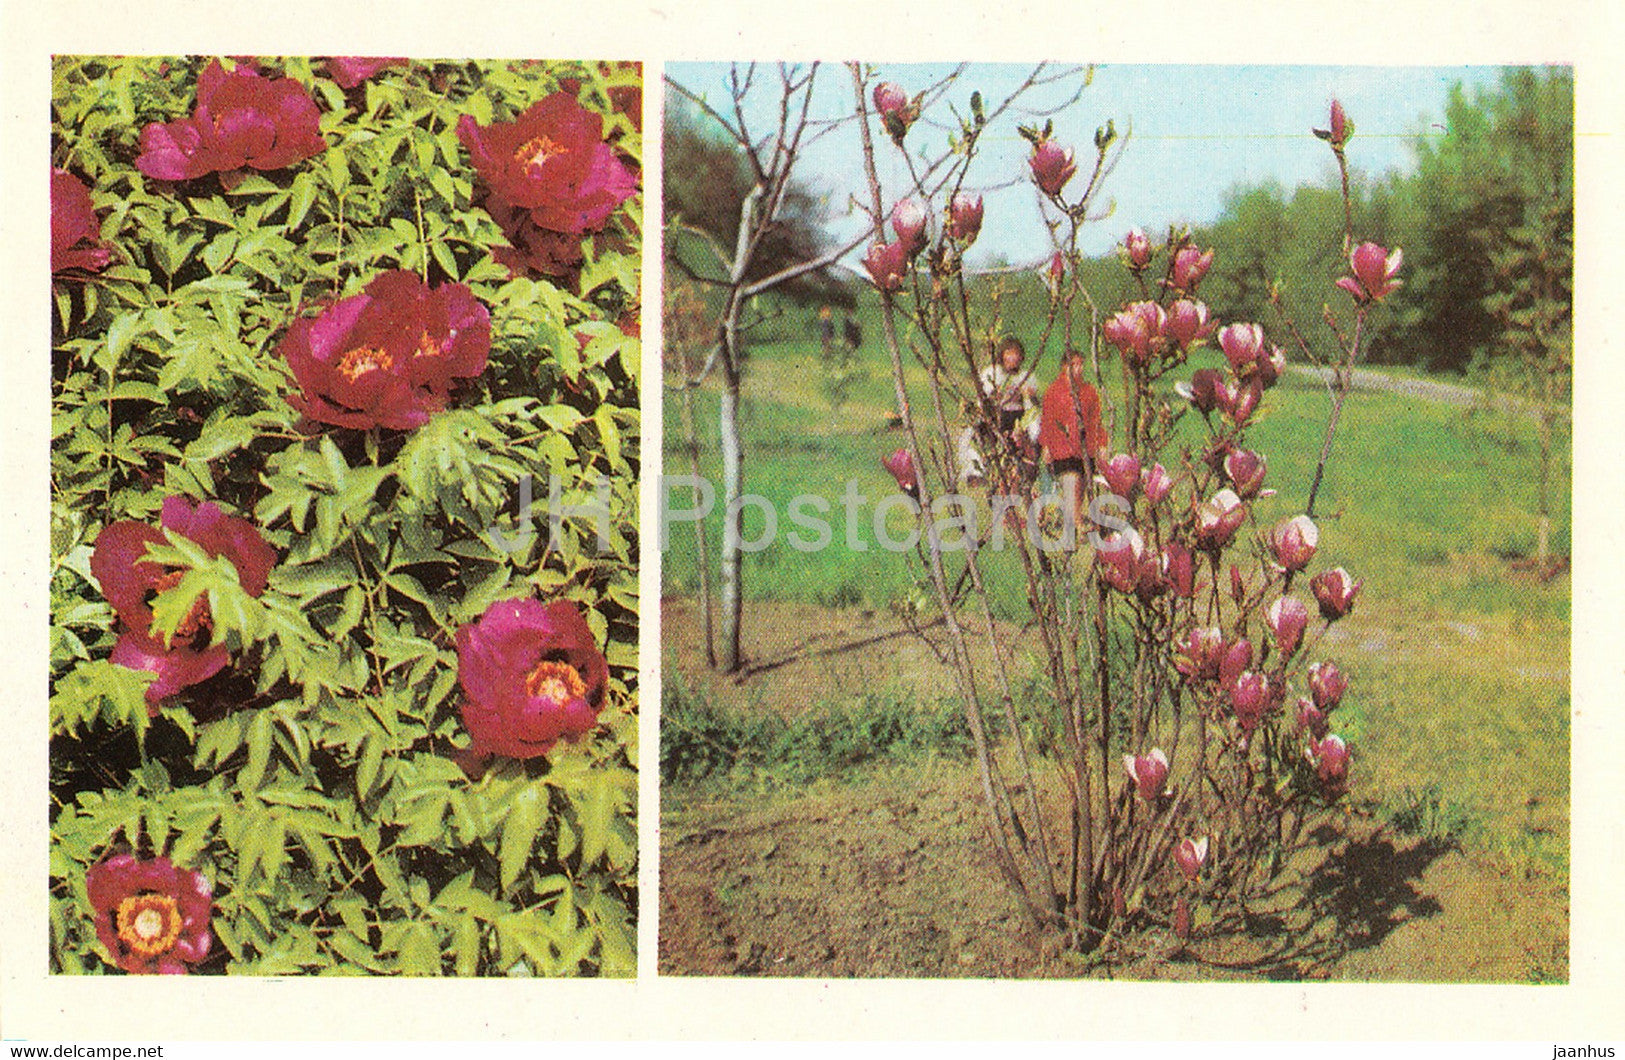 Central State Botanical Garden of Ukraine SSR - Tree Peony - Magnolia - 1978 - Ukraine USSR - unused - JH Postcards